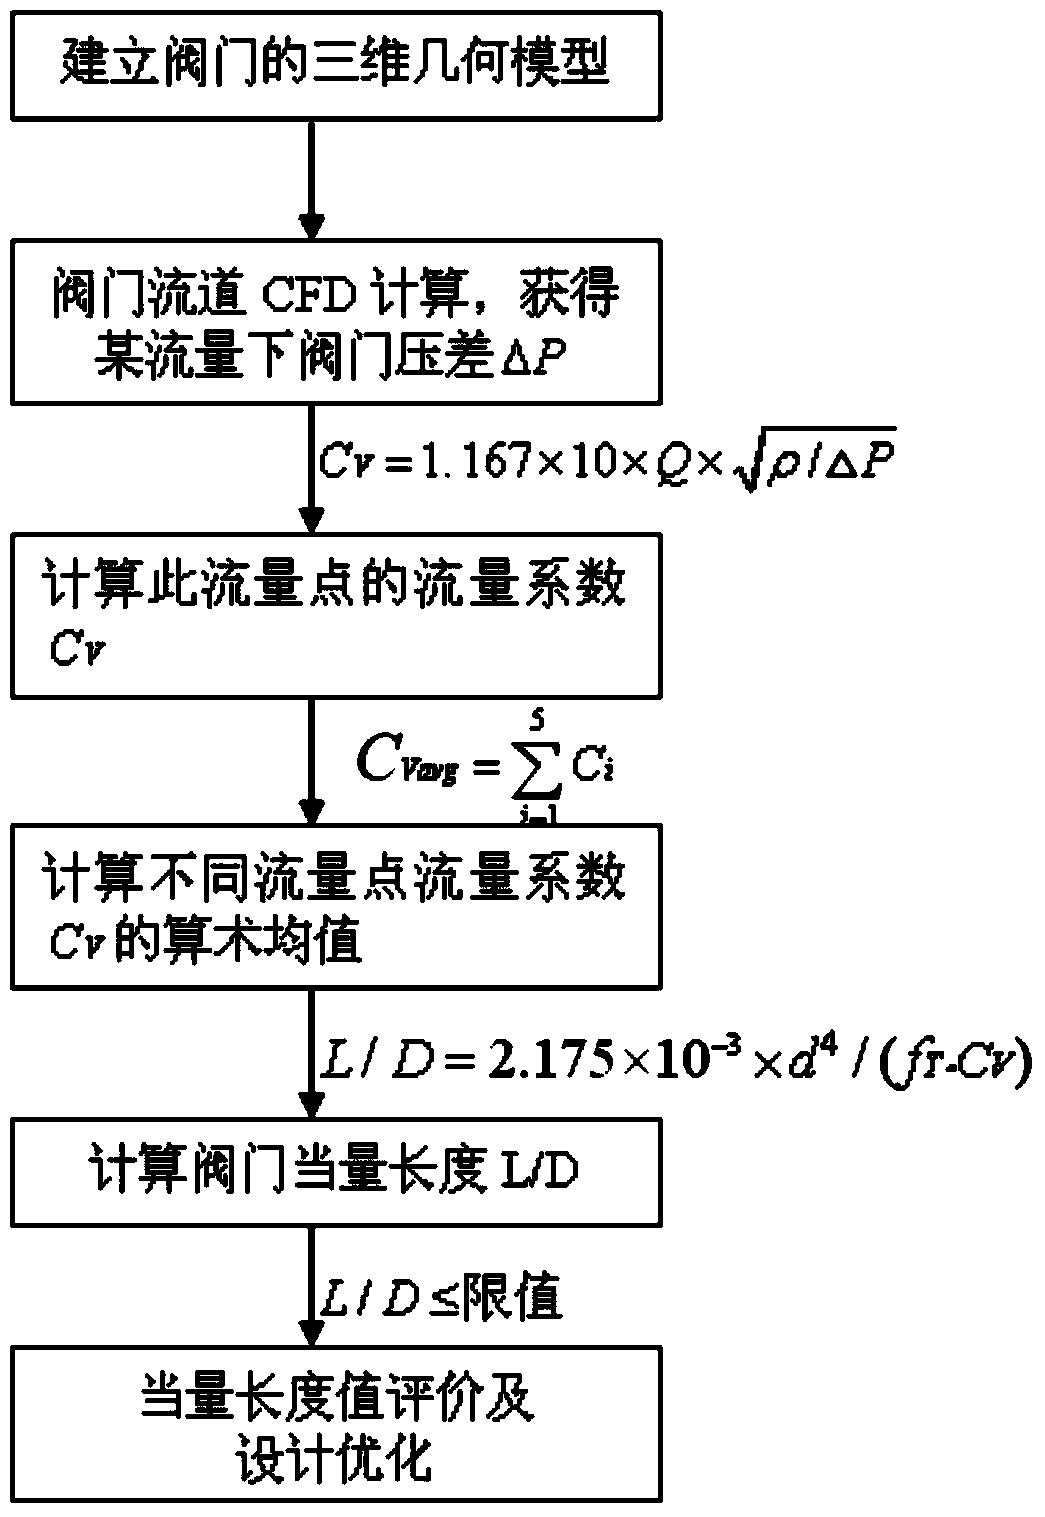 CFD (computational fluid dynamics) based method for computing equivalent length of valve